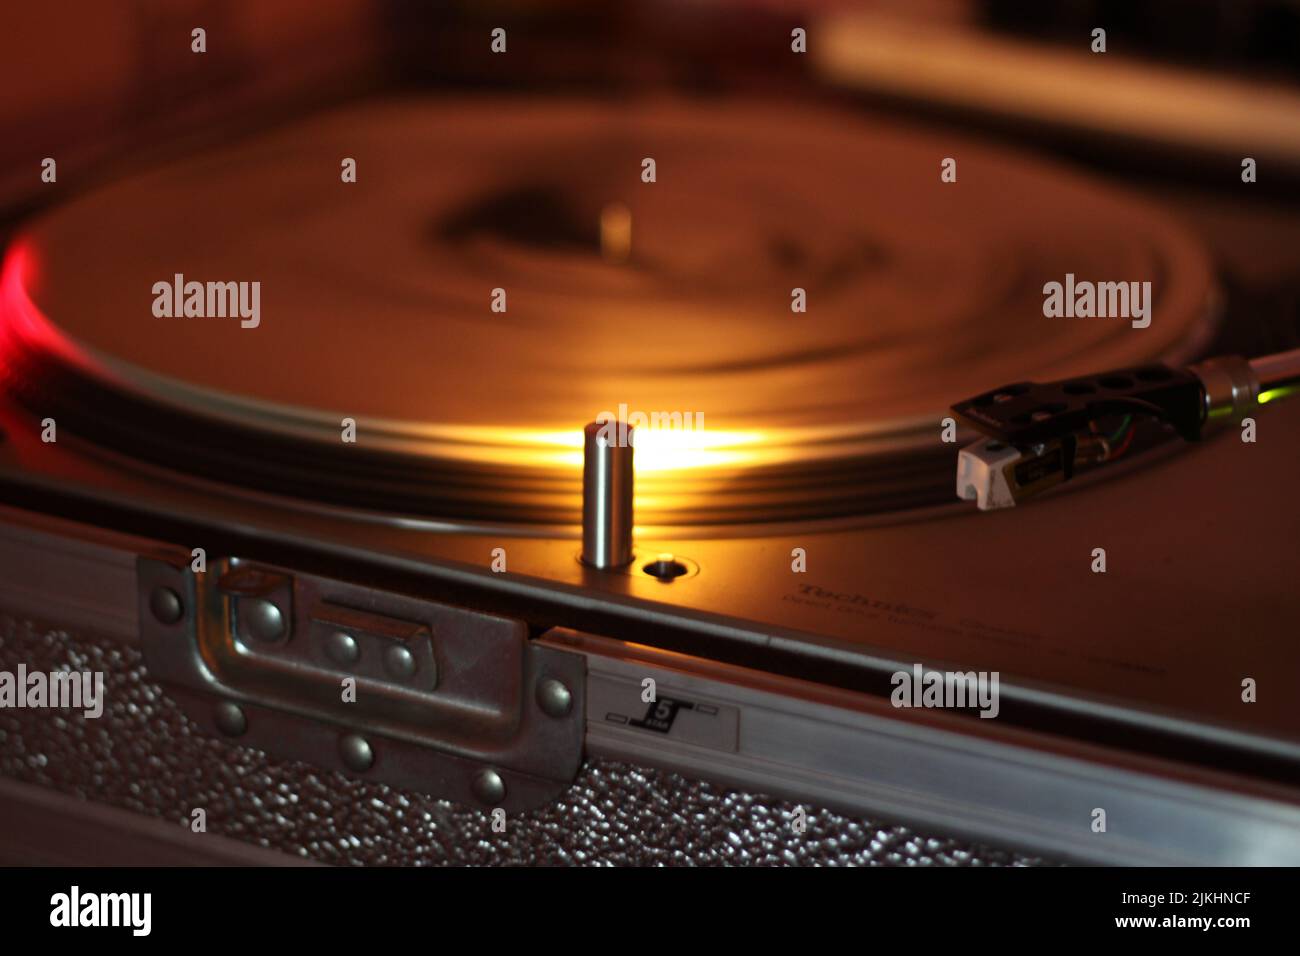 A selective focus shot of a beautiful metal record player Stock Photo